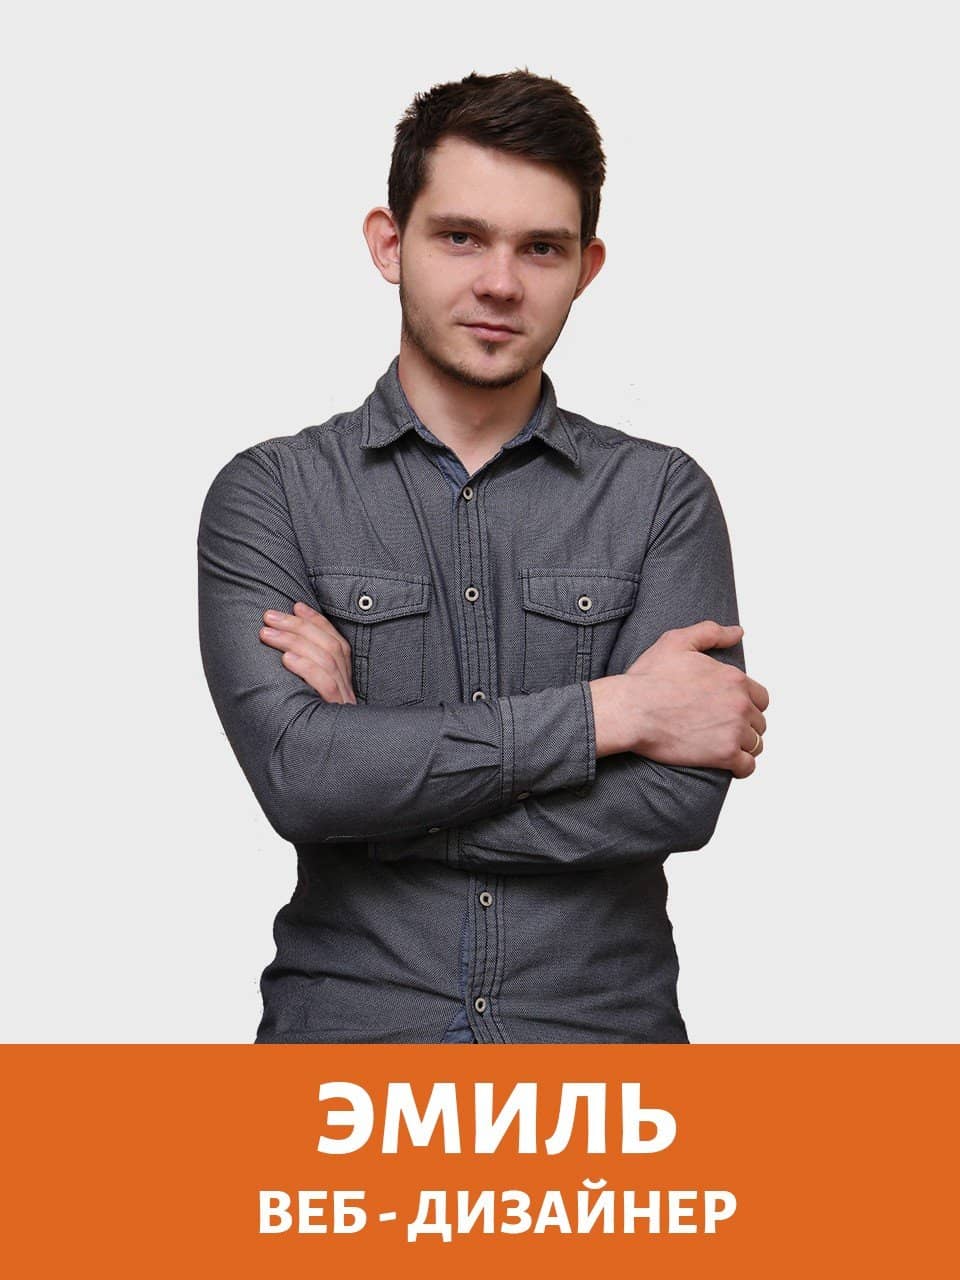 jemil veb dizajner - Главная